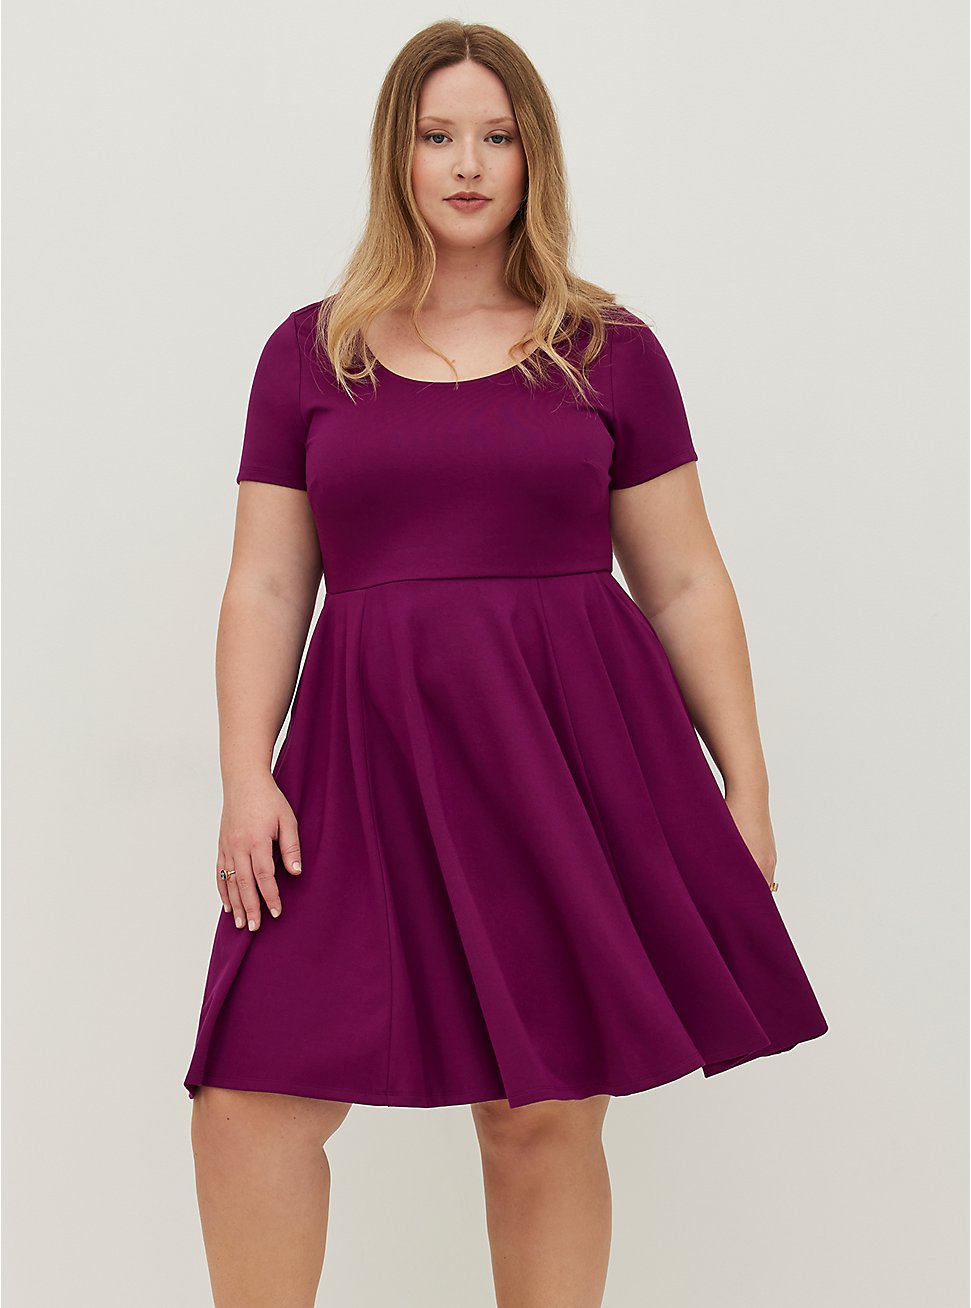 Scoop Neck Mini Dress - Ponte Purple, PURPLE, hi-res